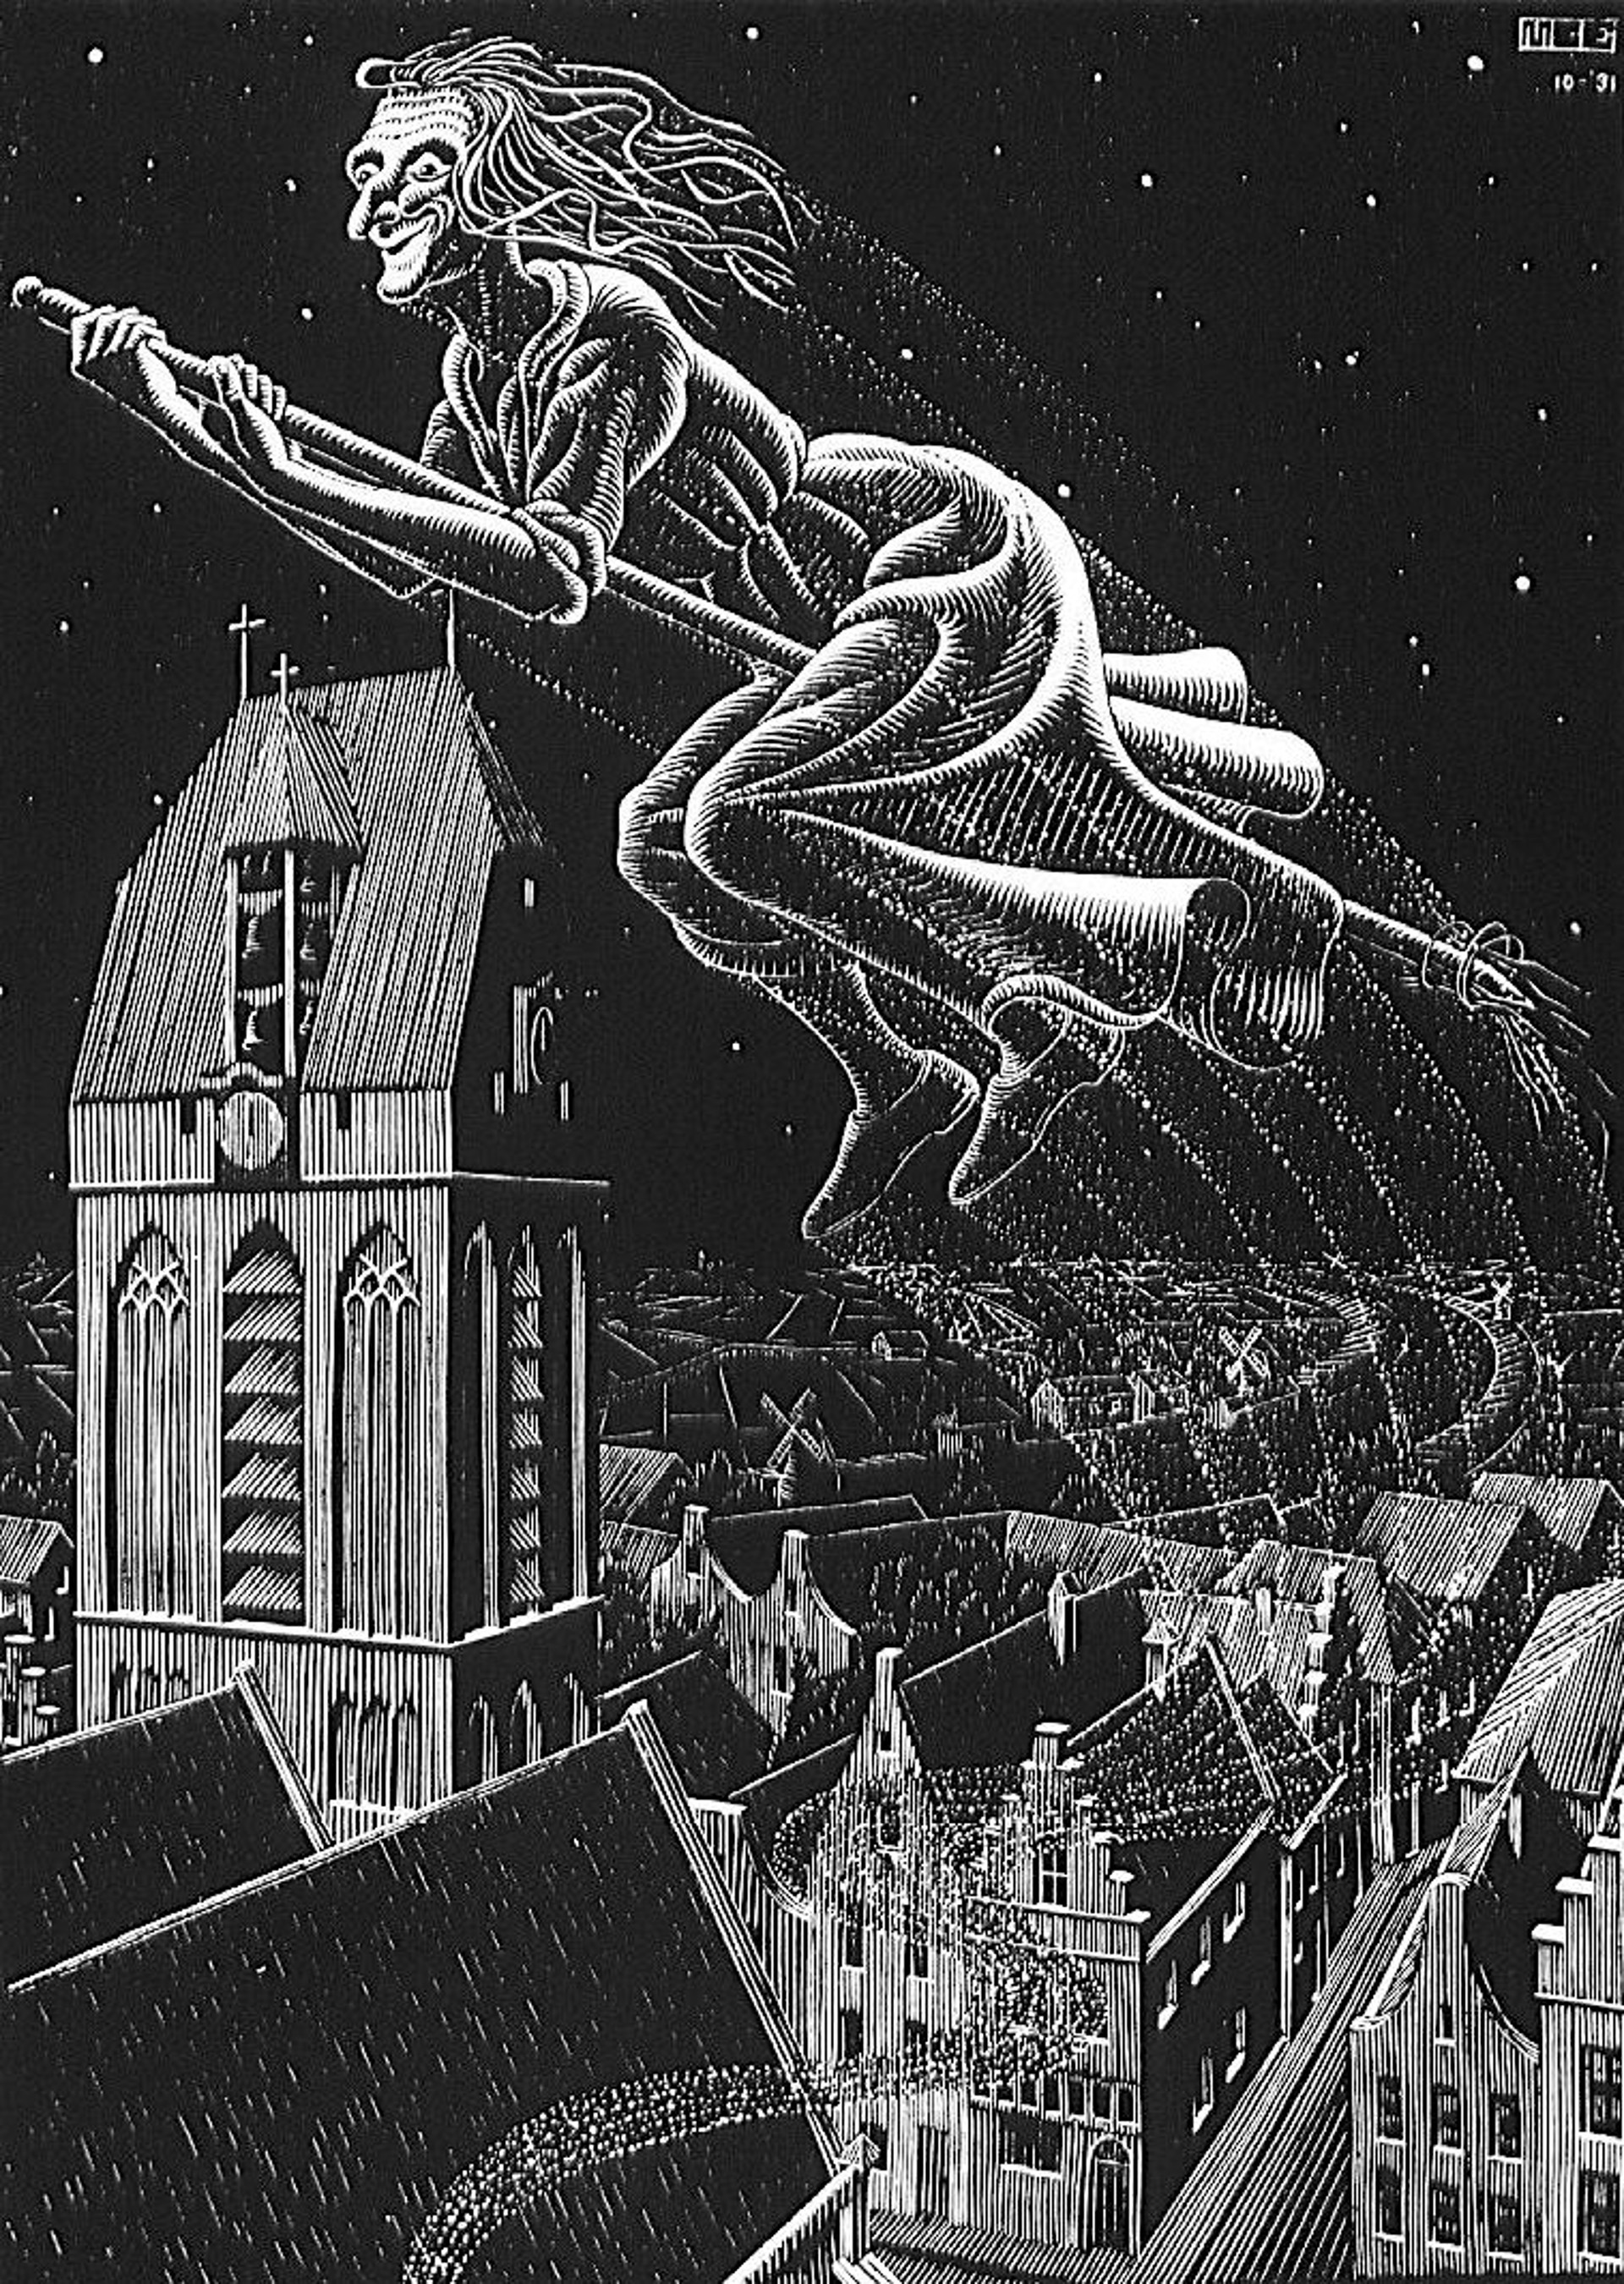 Scholastica (Flying Witch) by M.C. Escher